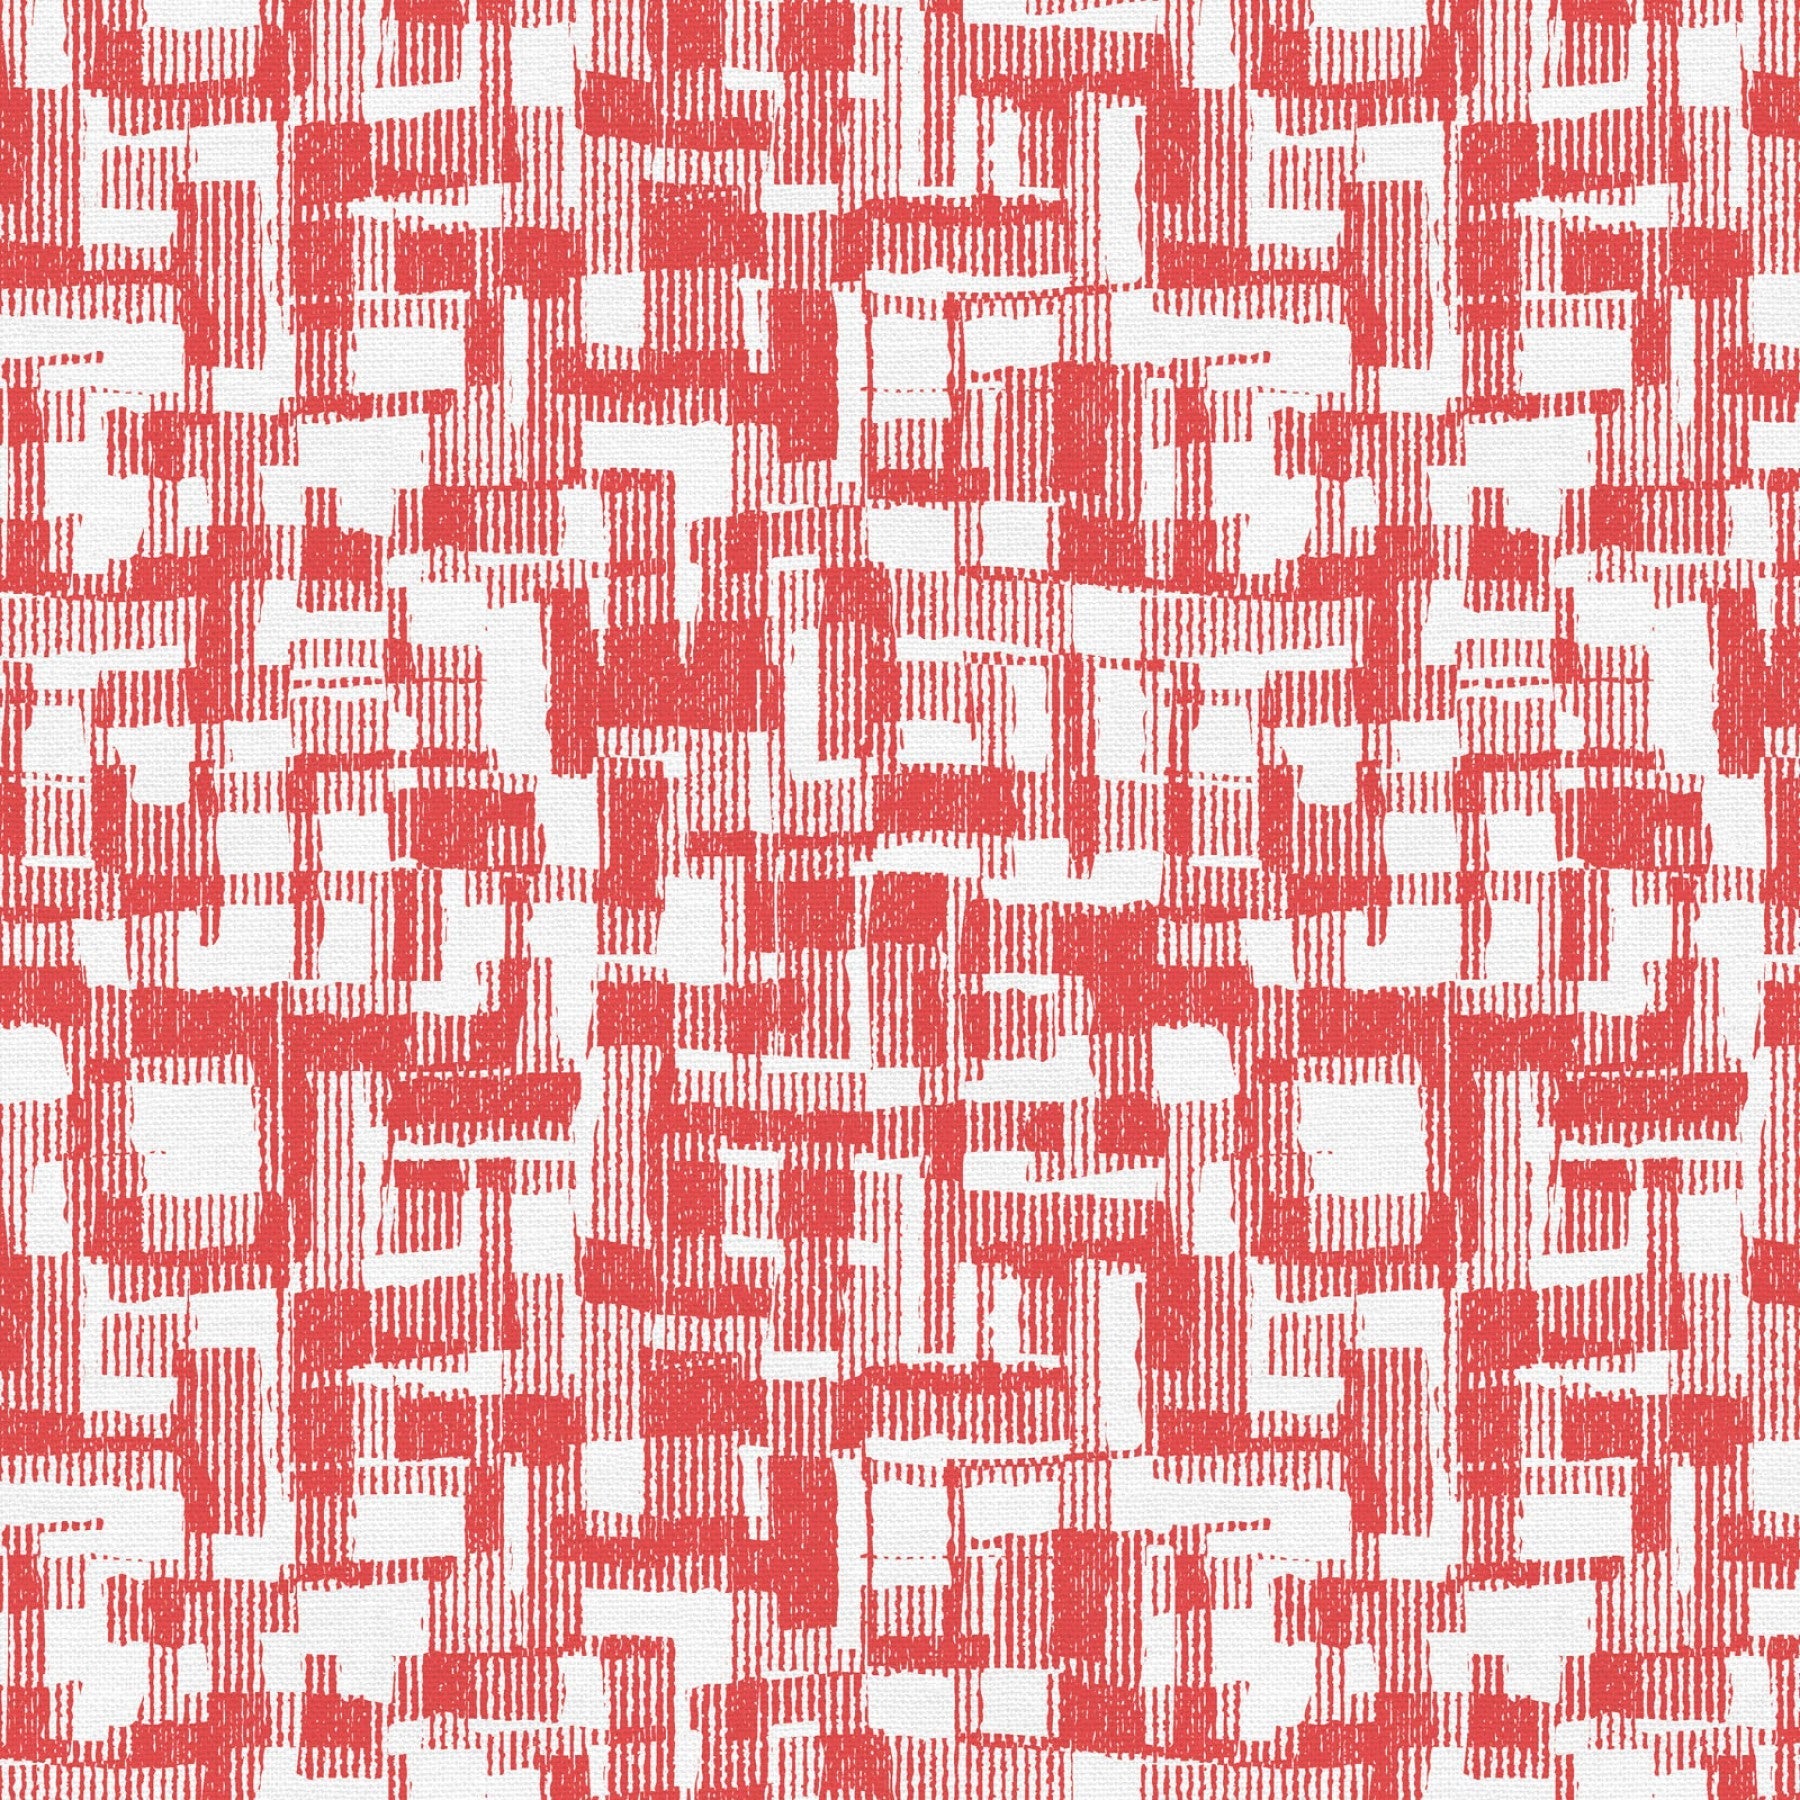 Red Verbena Barcodes Cotton Wideback Fabric Per Yard